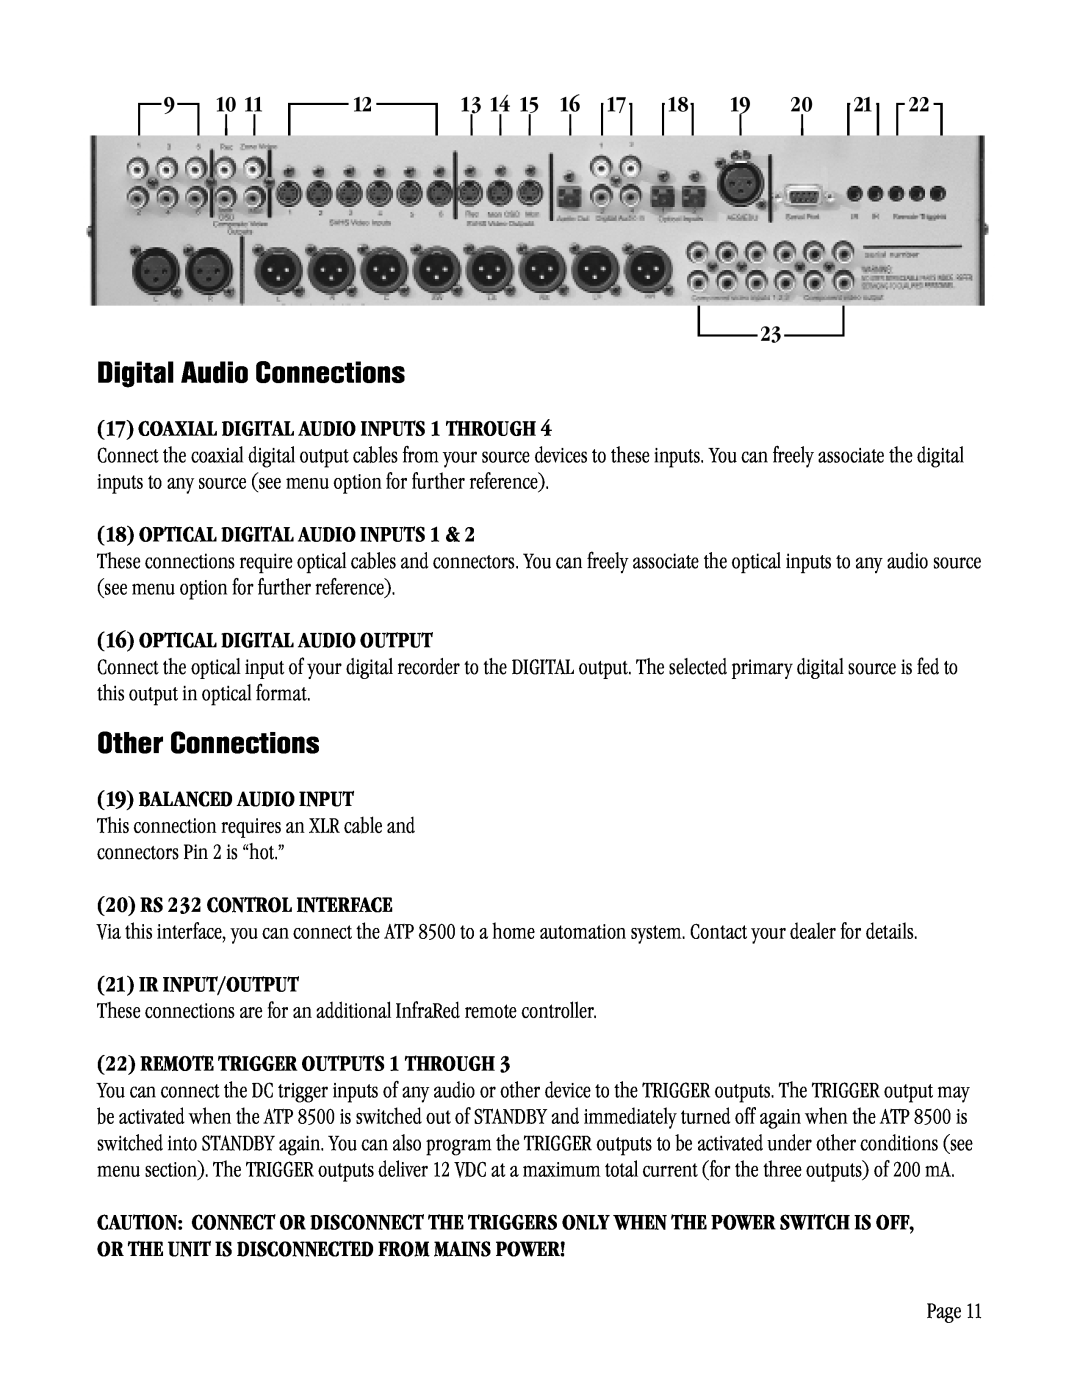 ATI Technologies ATP 8500 manual COAXIAL DIGITAL AUDIO INPUTS 1 THROUGH, Optical Digital Audio Inputs, Balanced Audio Input 